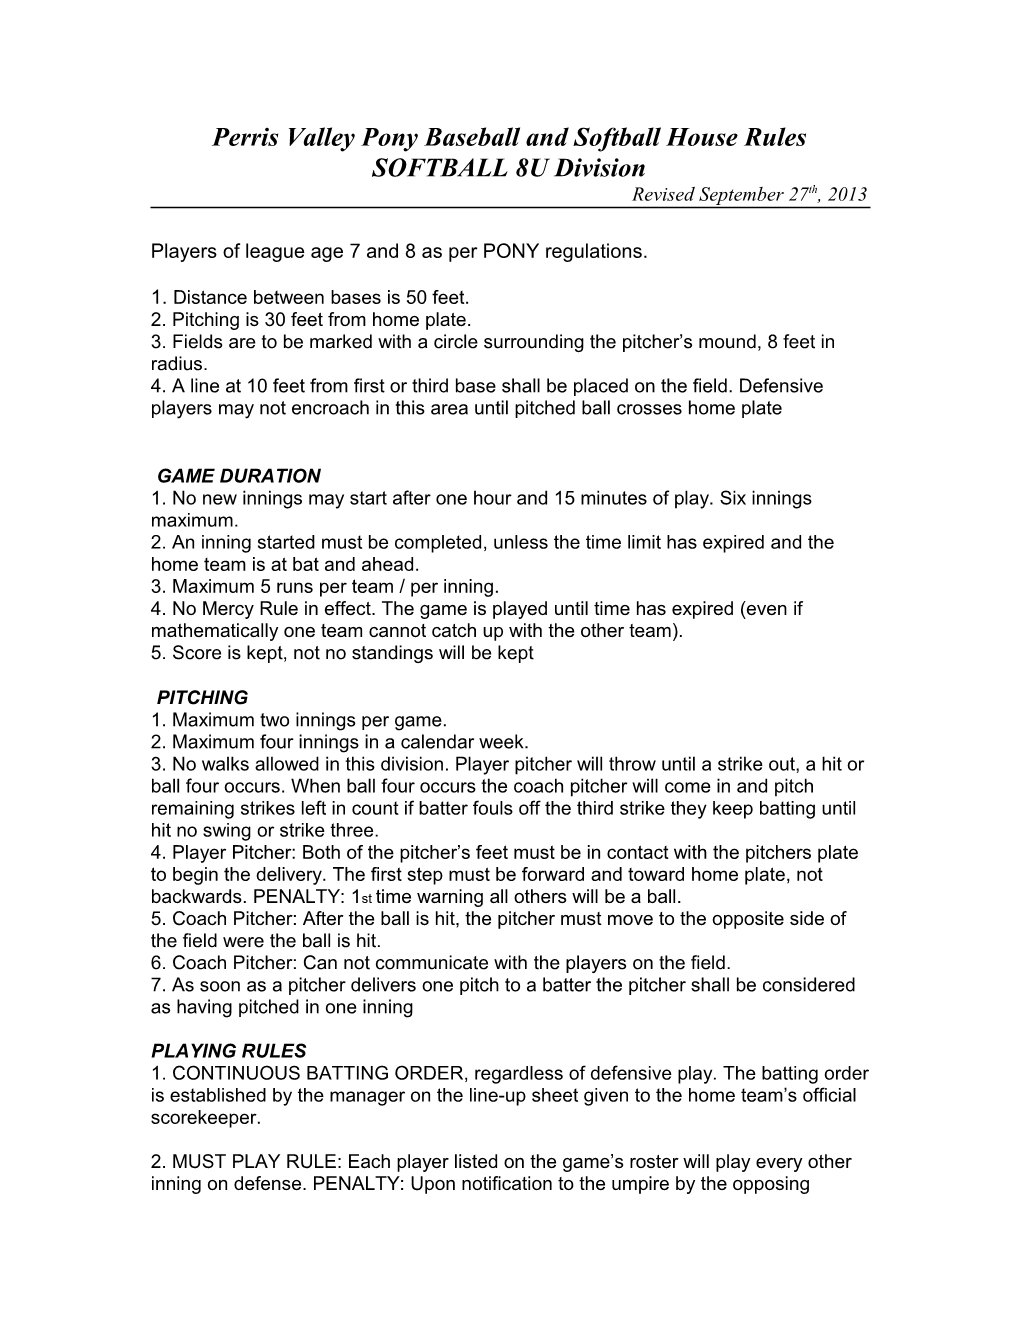 Softball 8U House Rules